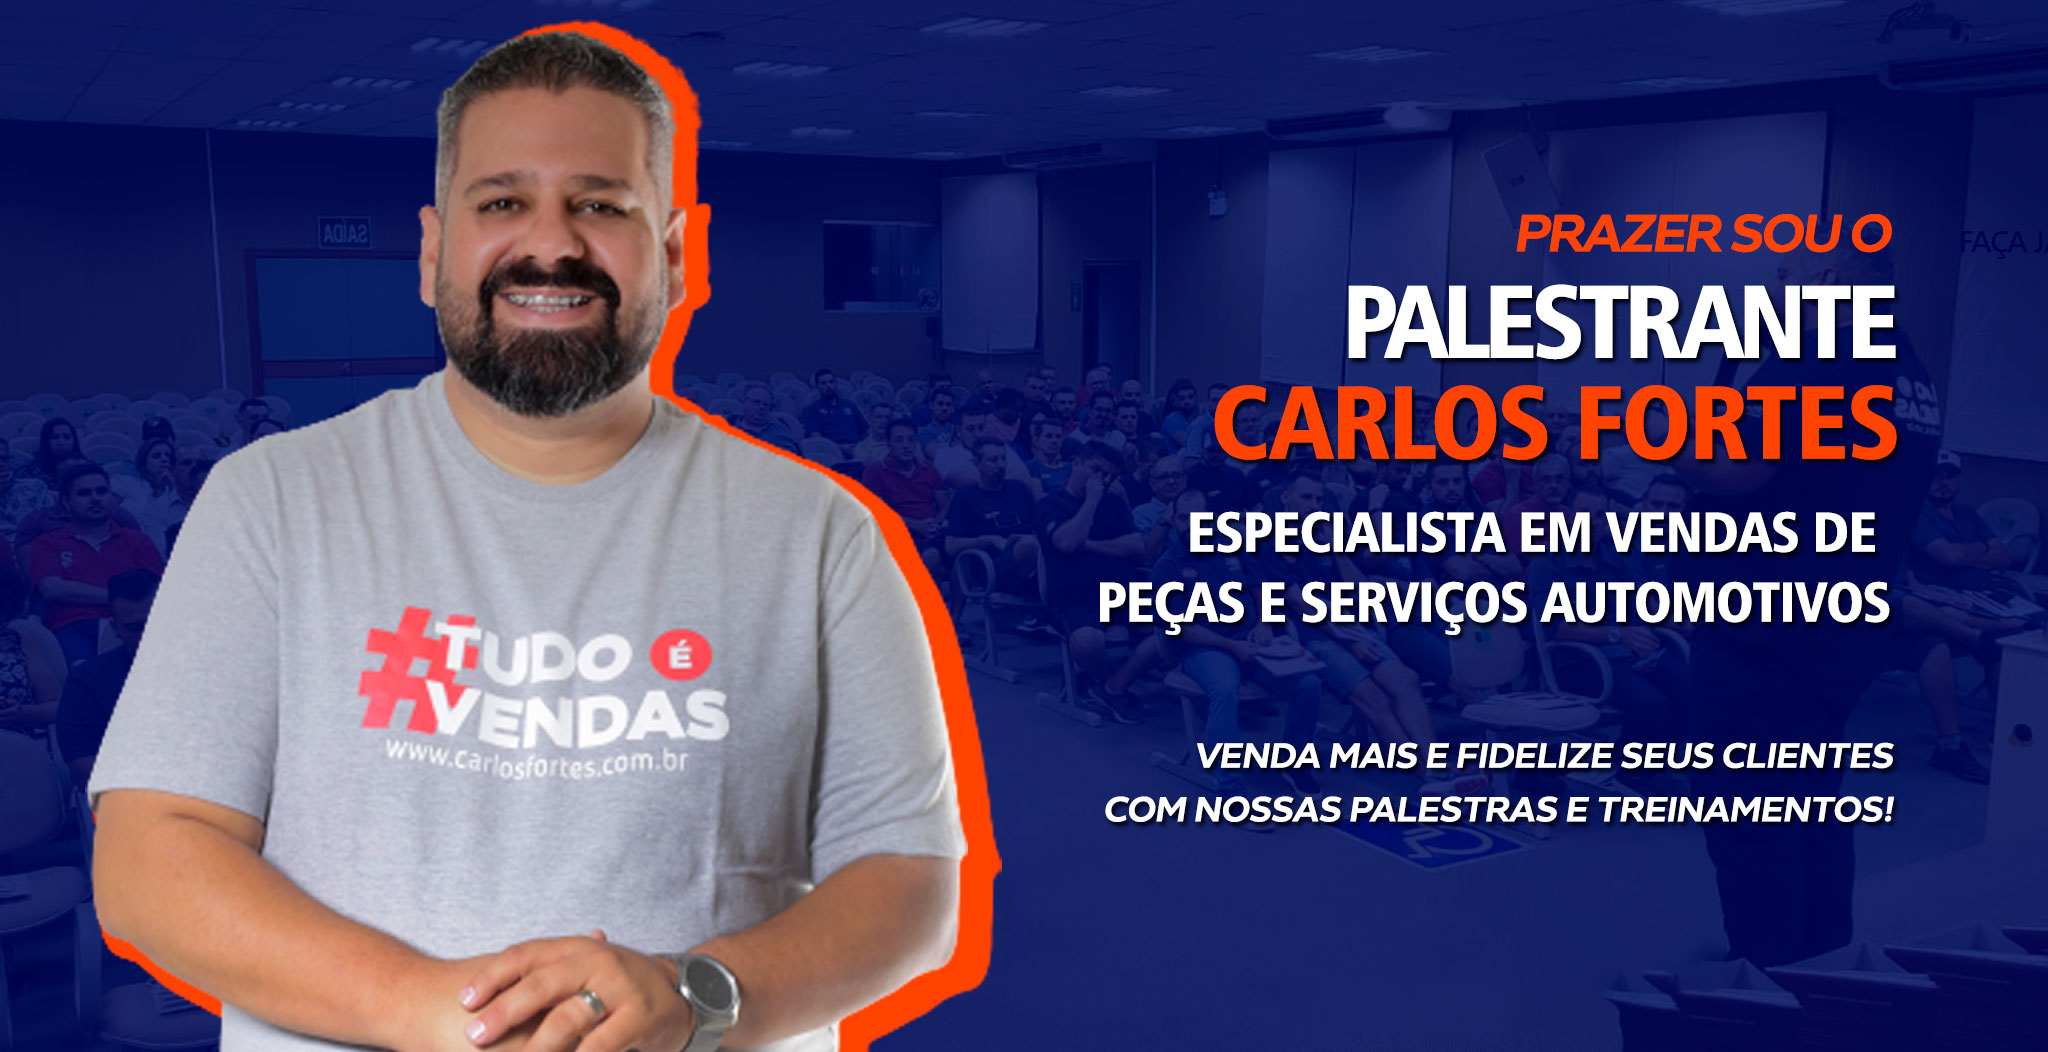 (c) Carlosfortes.com.br